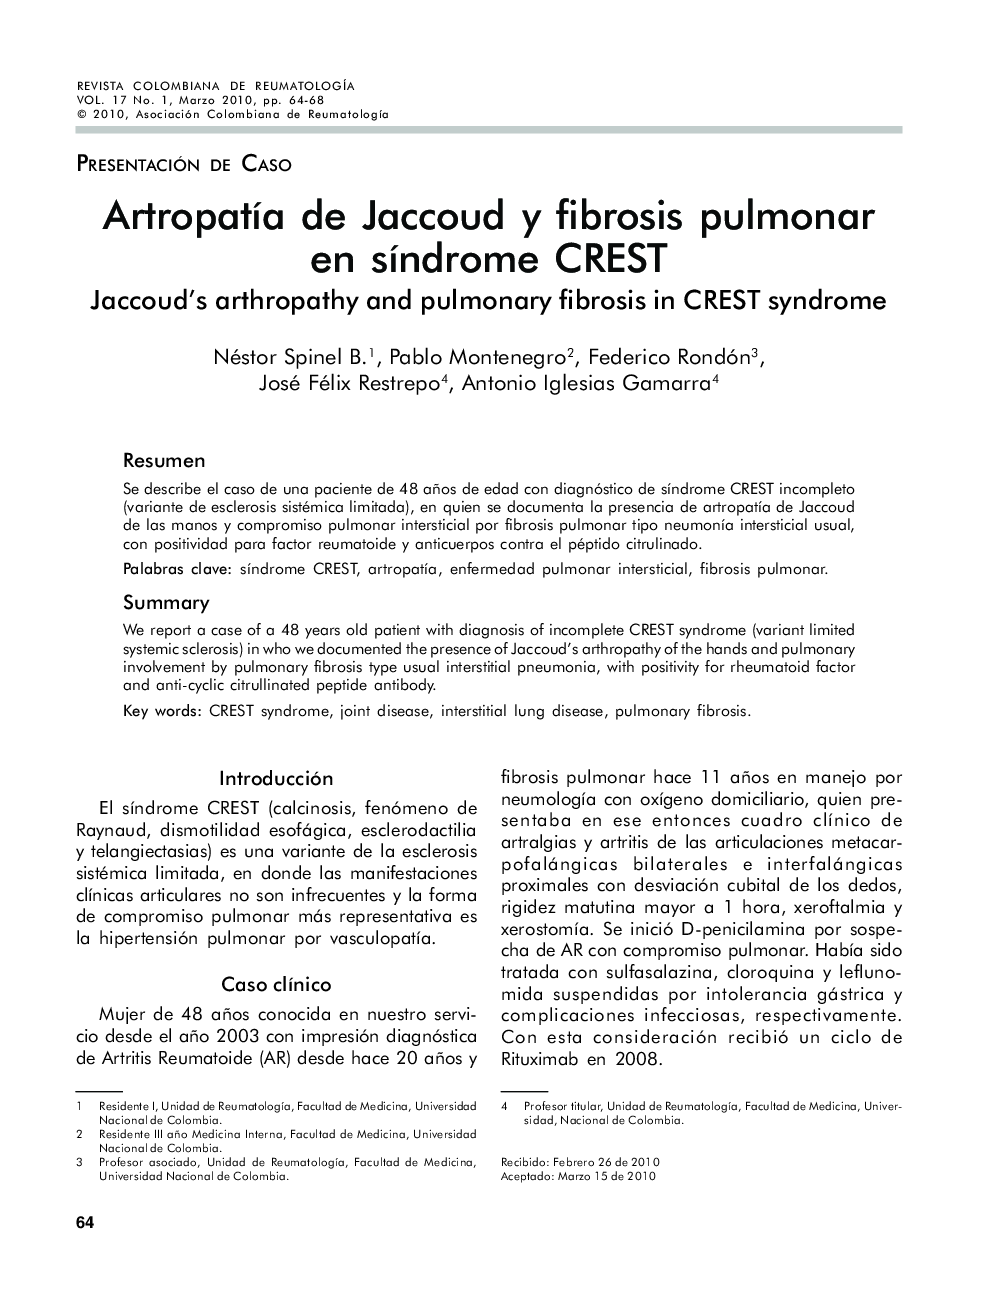 ArtropatÃ­a de Jaccoud y fibrosis pulmonar en sÃ­ndrome CREST